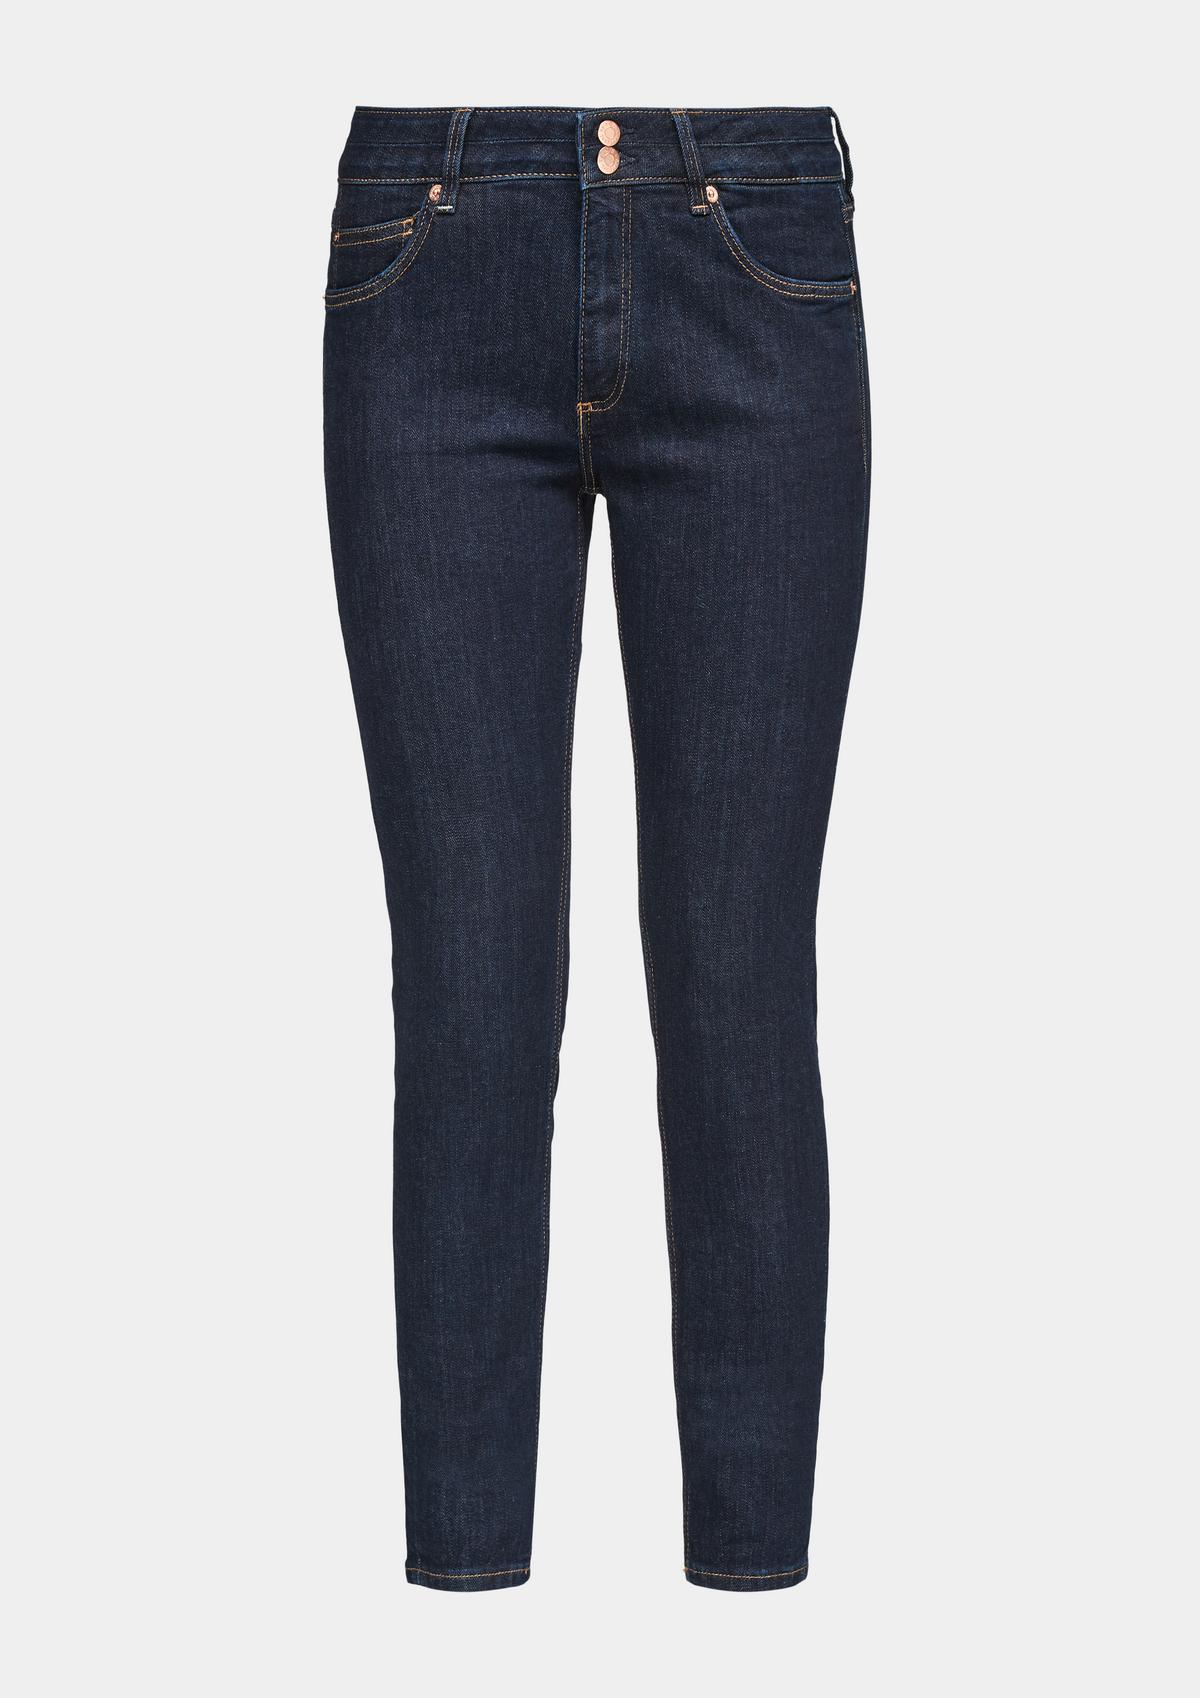 s.Oliver Jeans hlače Sadie / Skinny Fit / Mid Rise / oprijete hlačnice